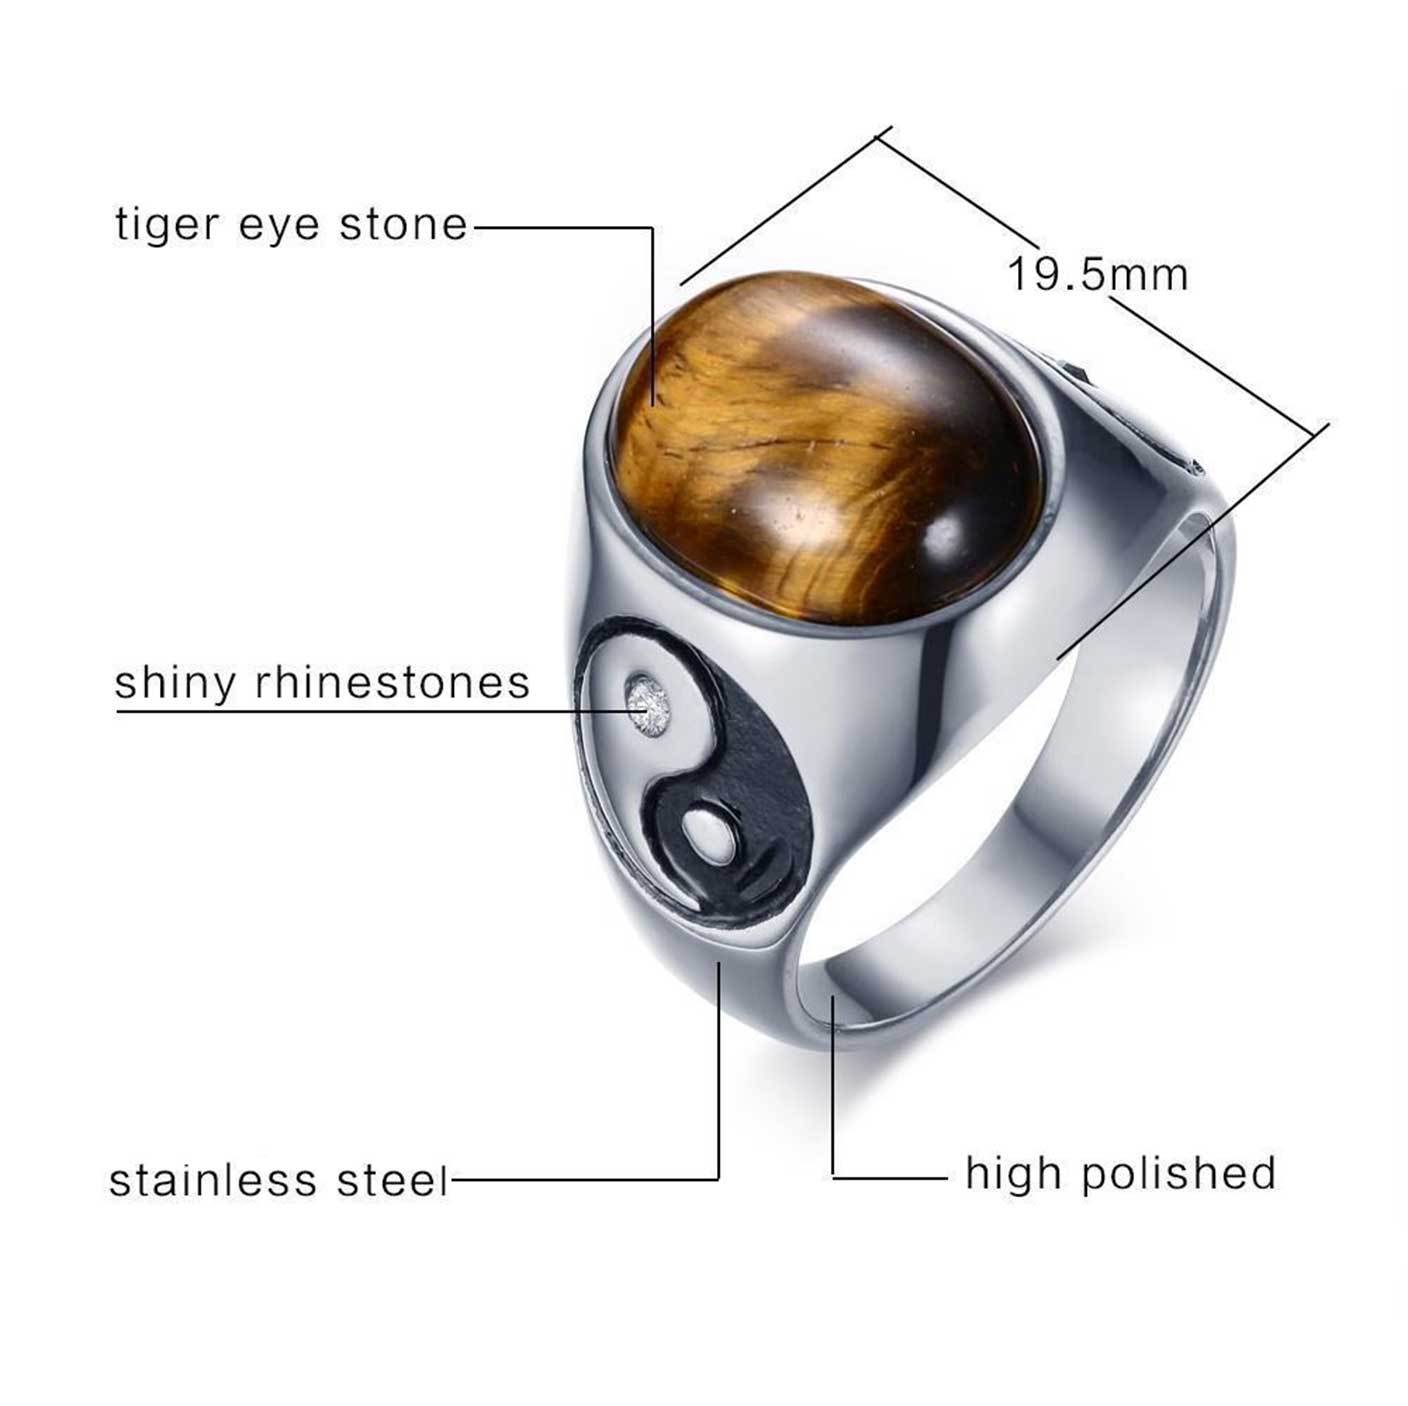 Natural Stone Yin Yang Positivity Ring - Ring - Inner Wisdom Store